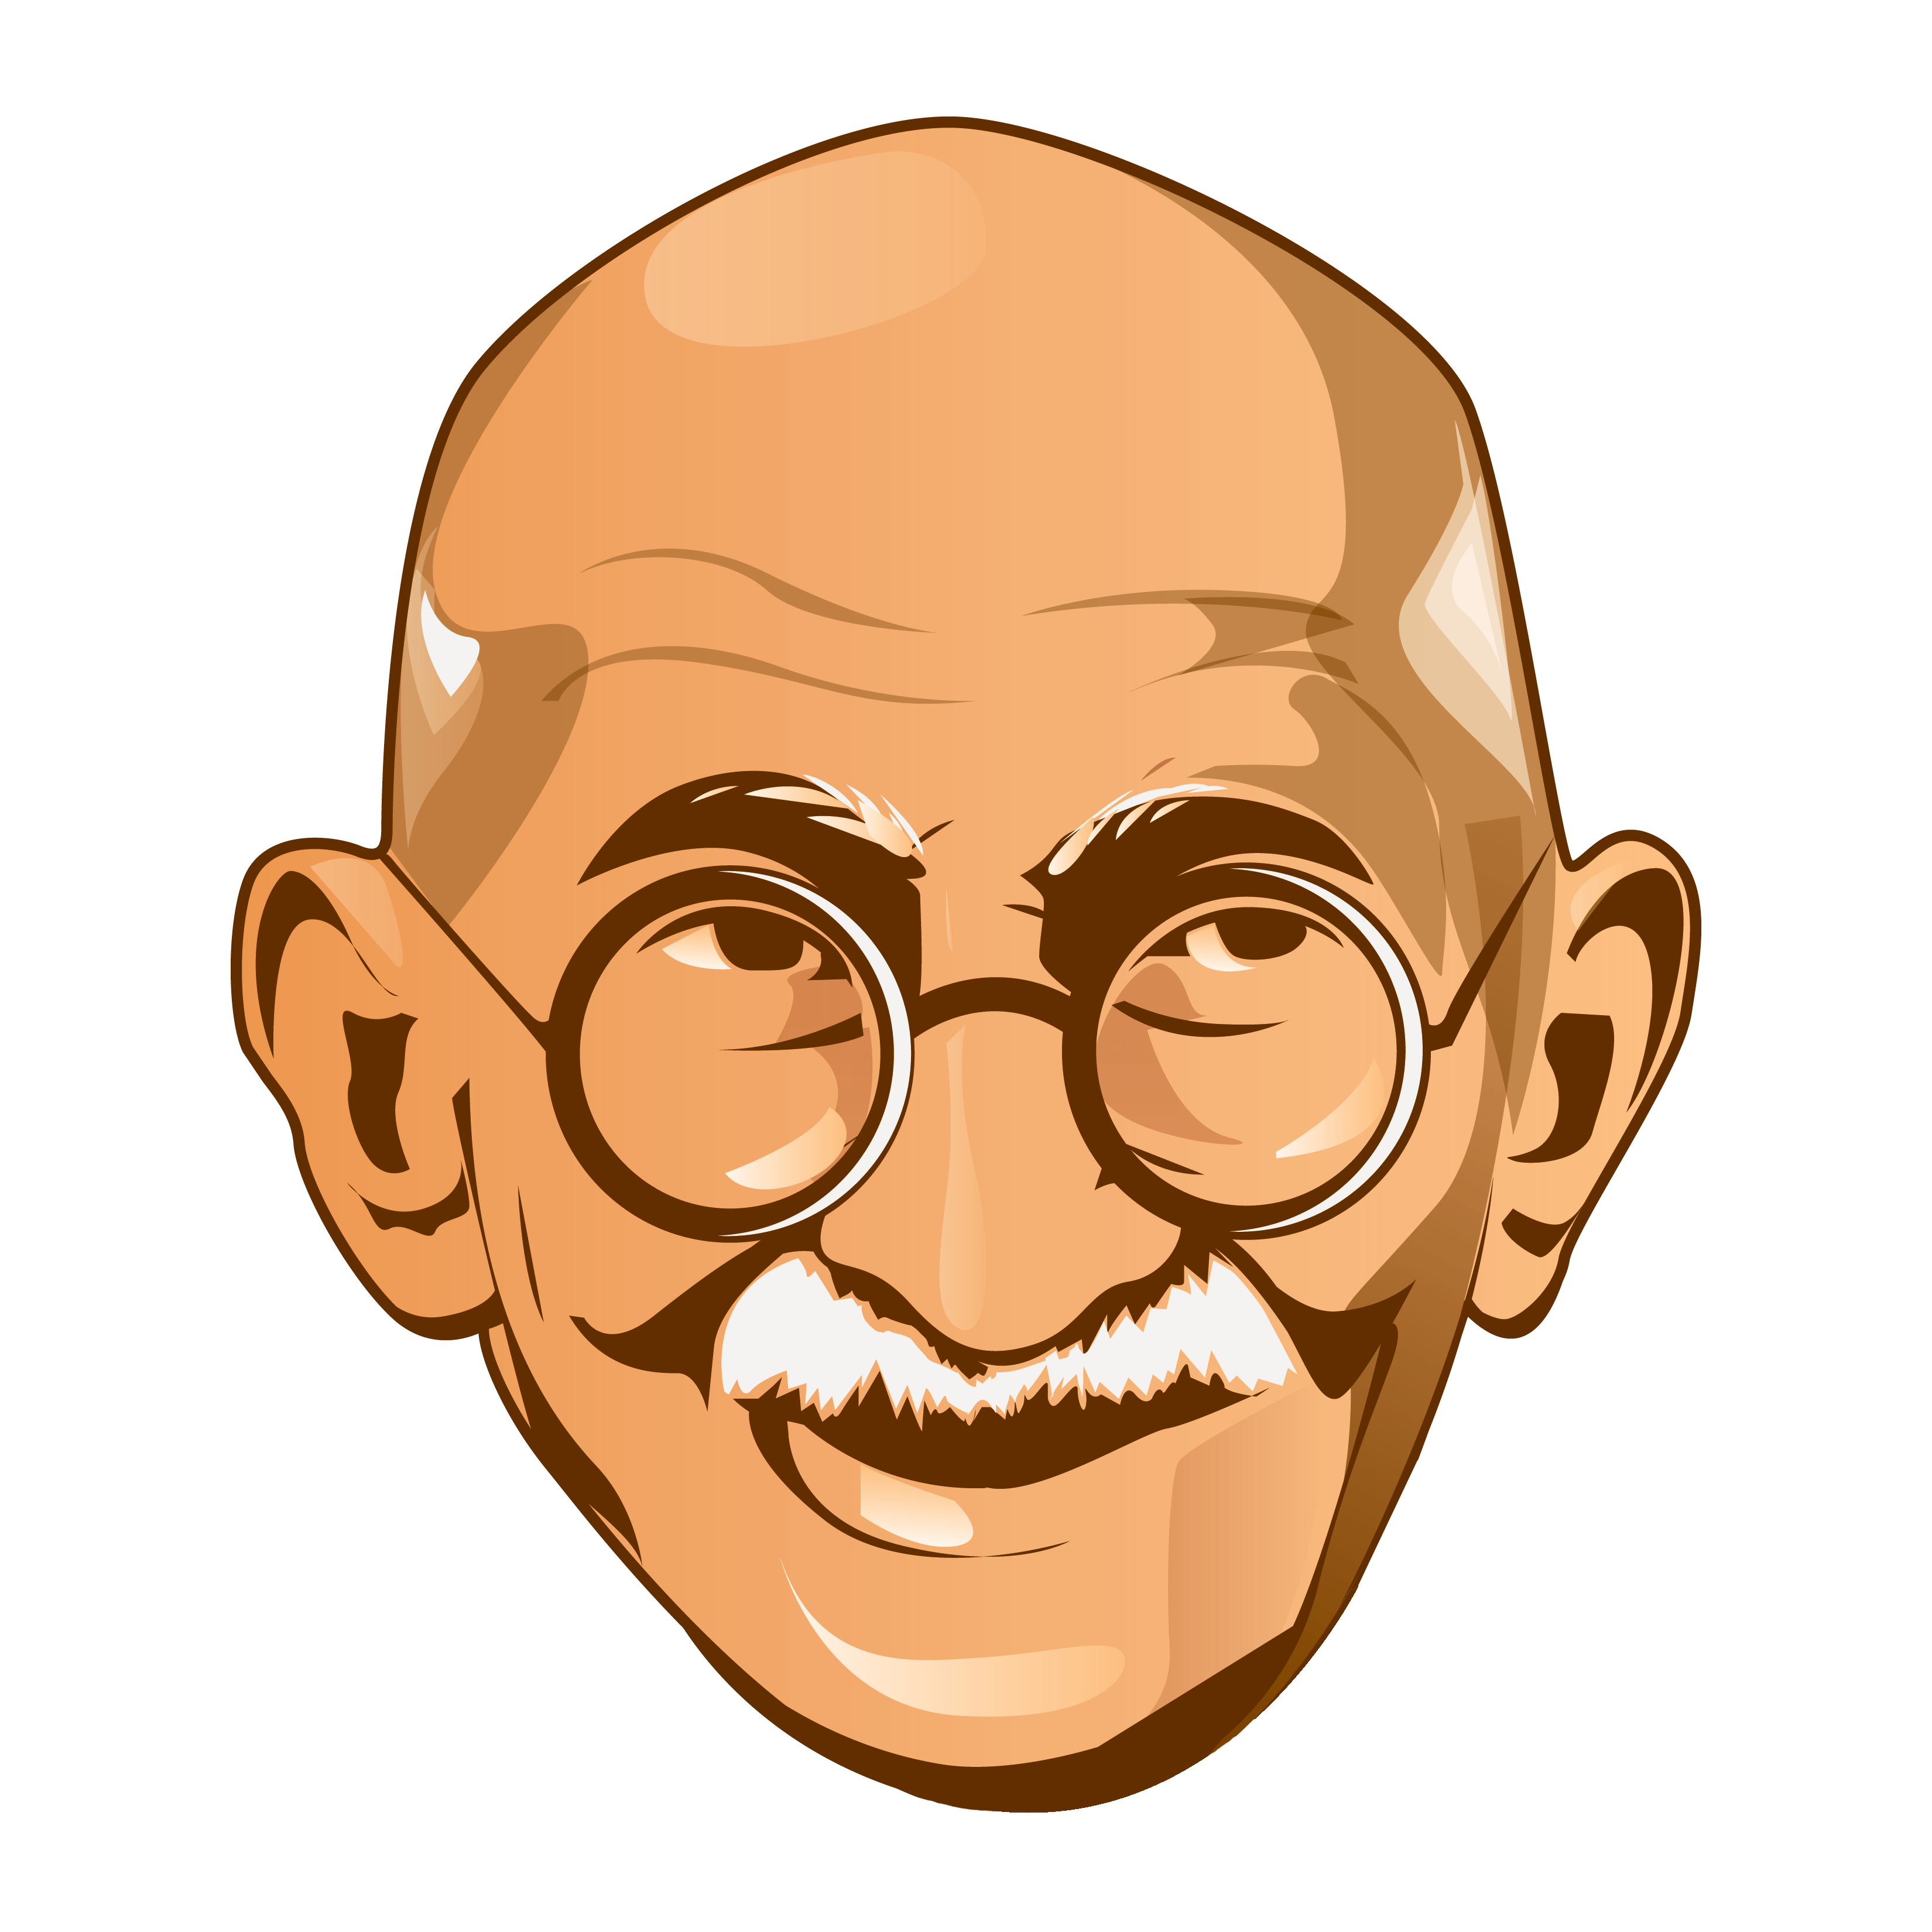 Jayanti Facial Hair Mahatma Gandhi Human PNG Image